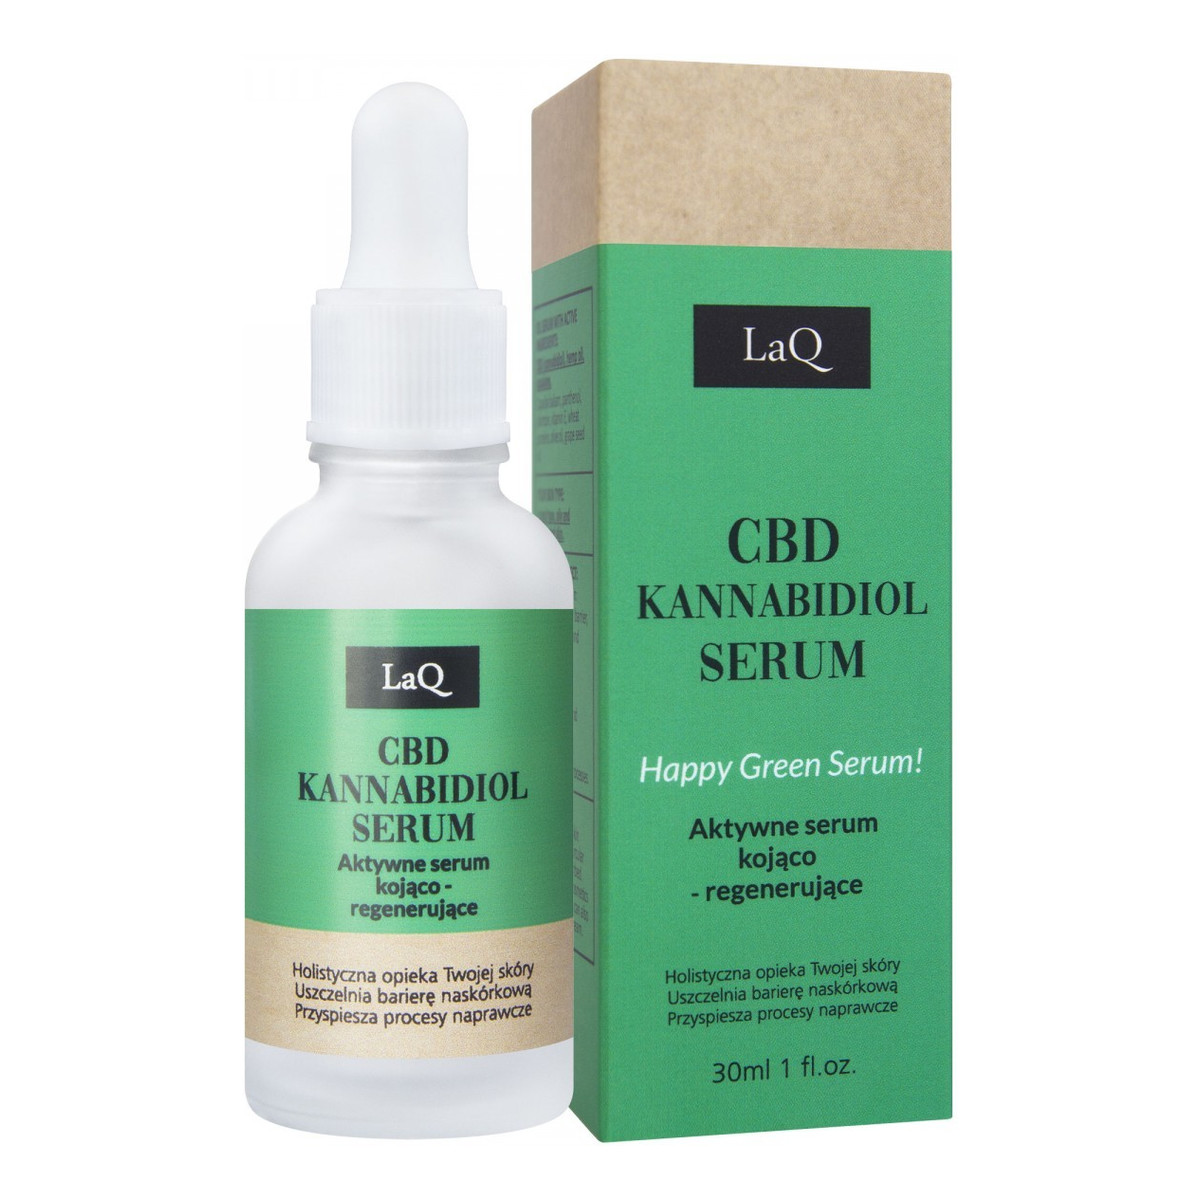 Laq CBD Kannabidiol Serum Aktywne Serum kojąco-regenerujące Happy Green 30ml